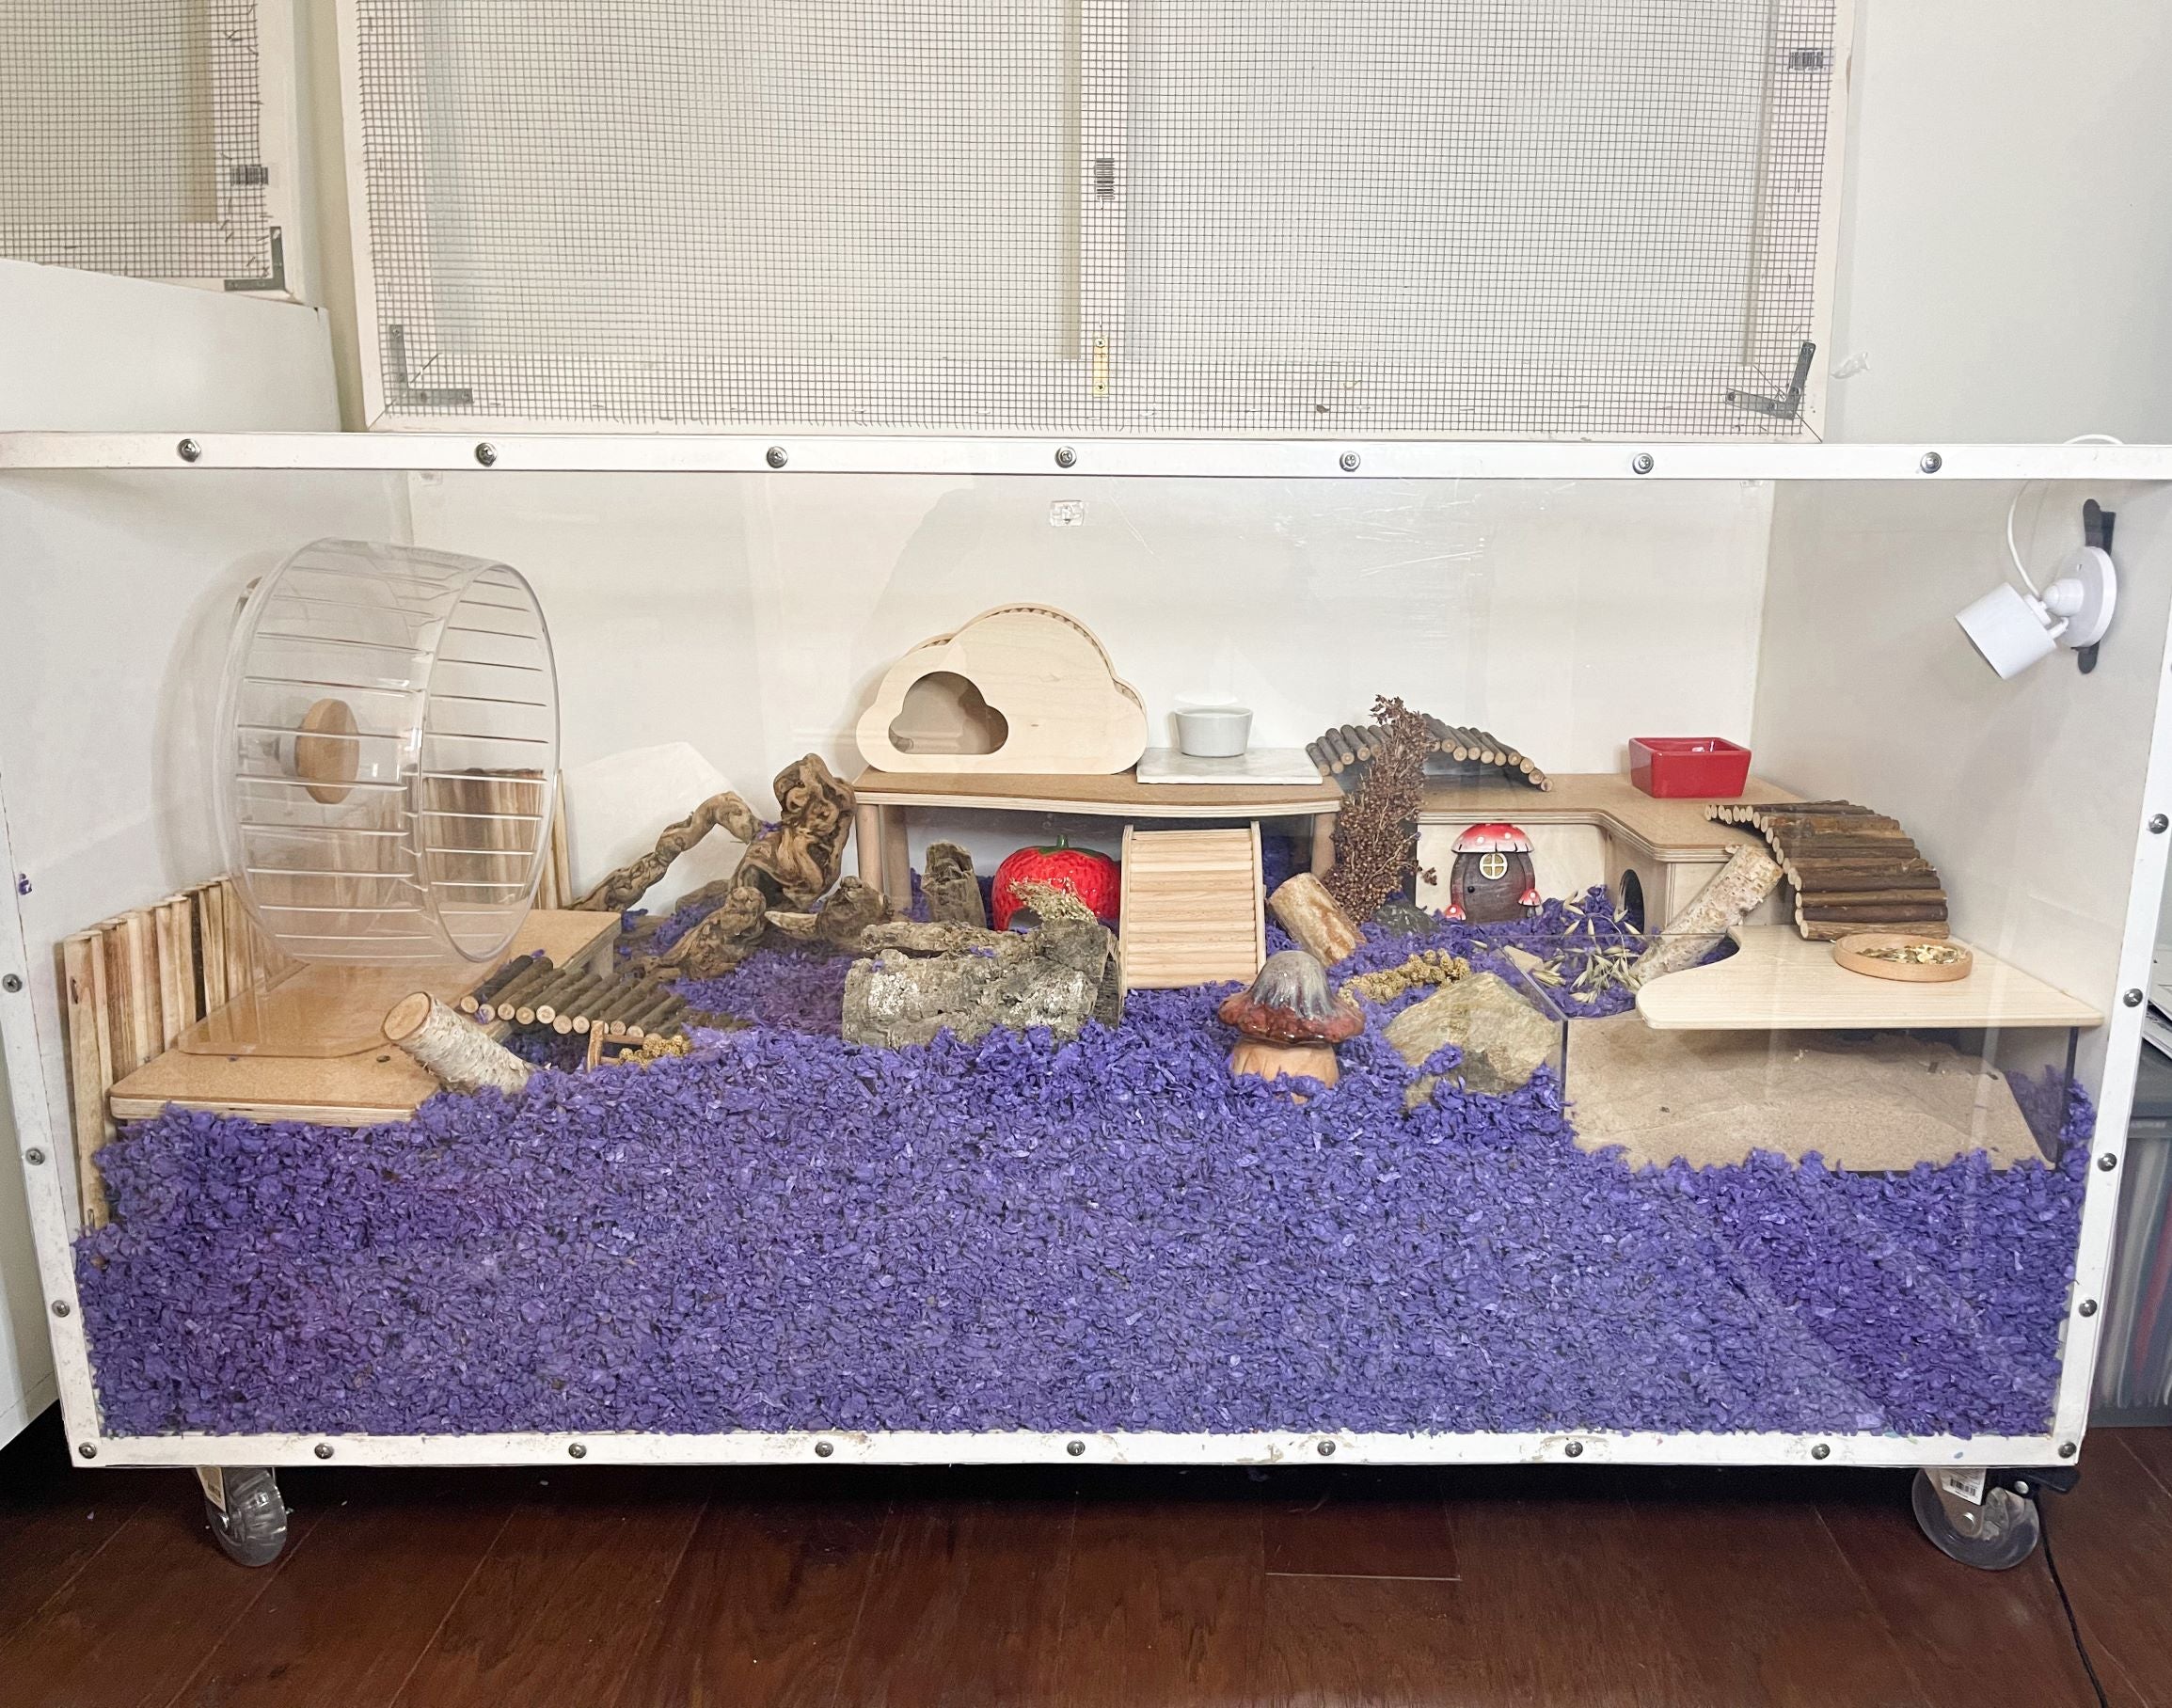 carefresh purple bedding large hamster habitat